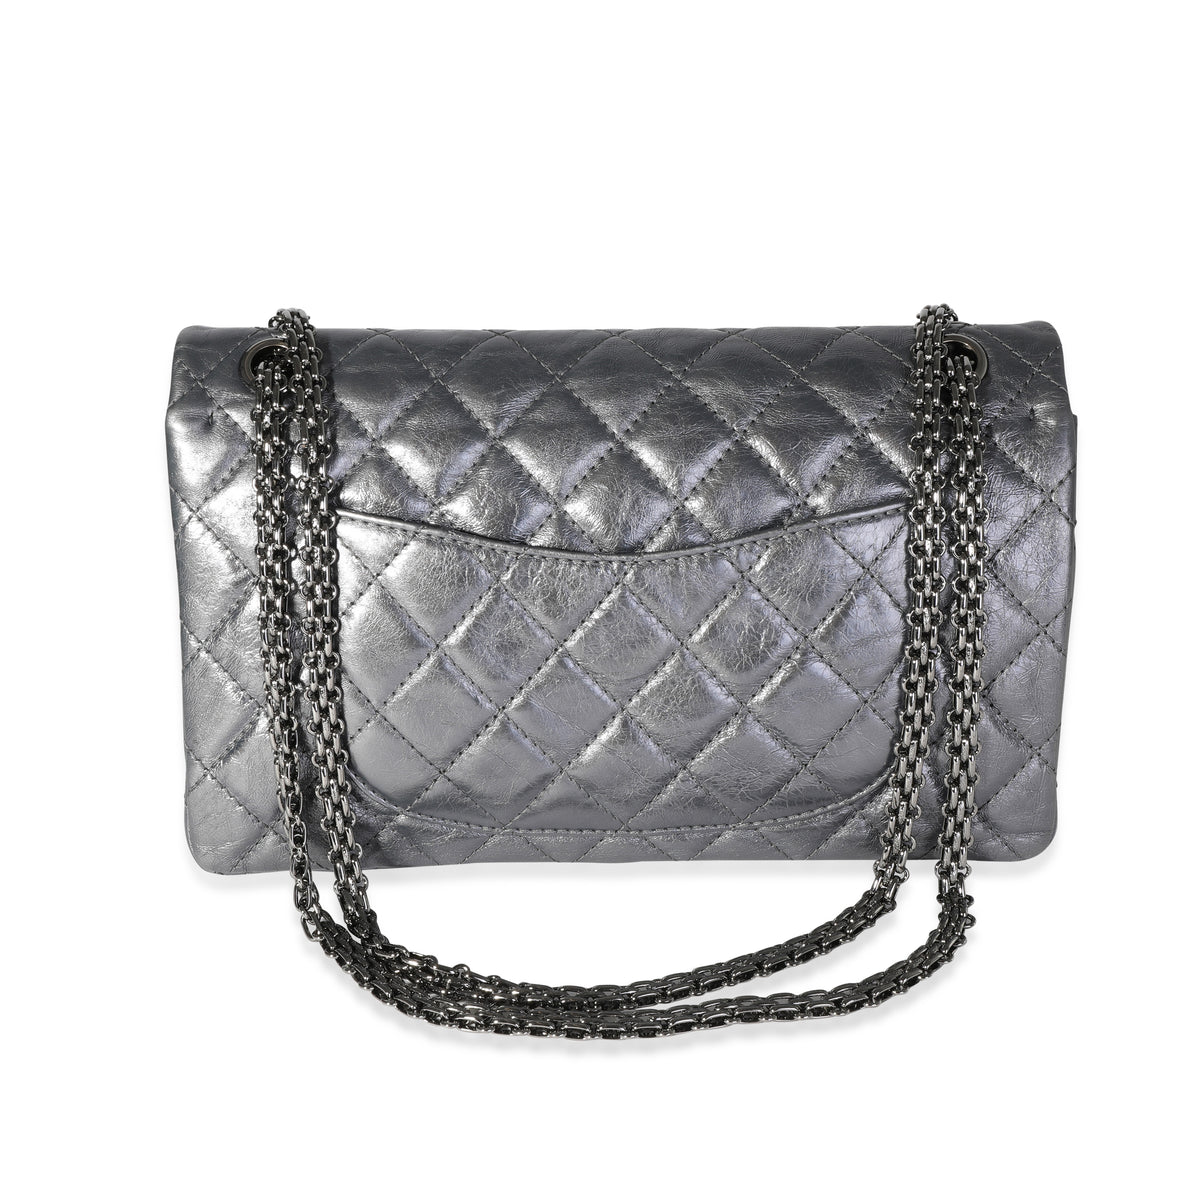 Chanel Reissue 2.55 Waist Bag Quilted Aged Calfskin